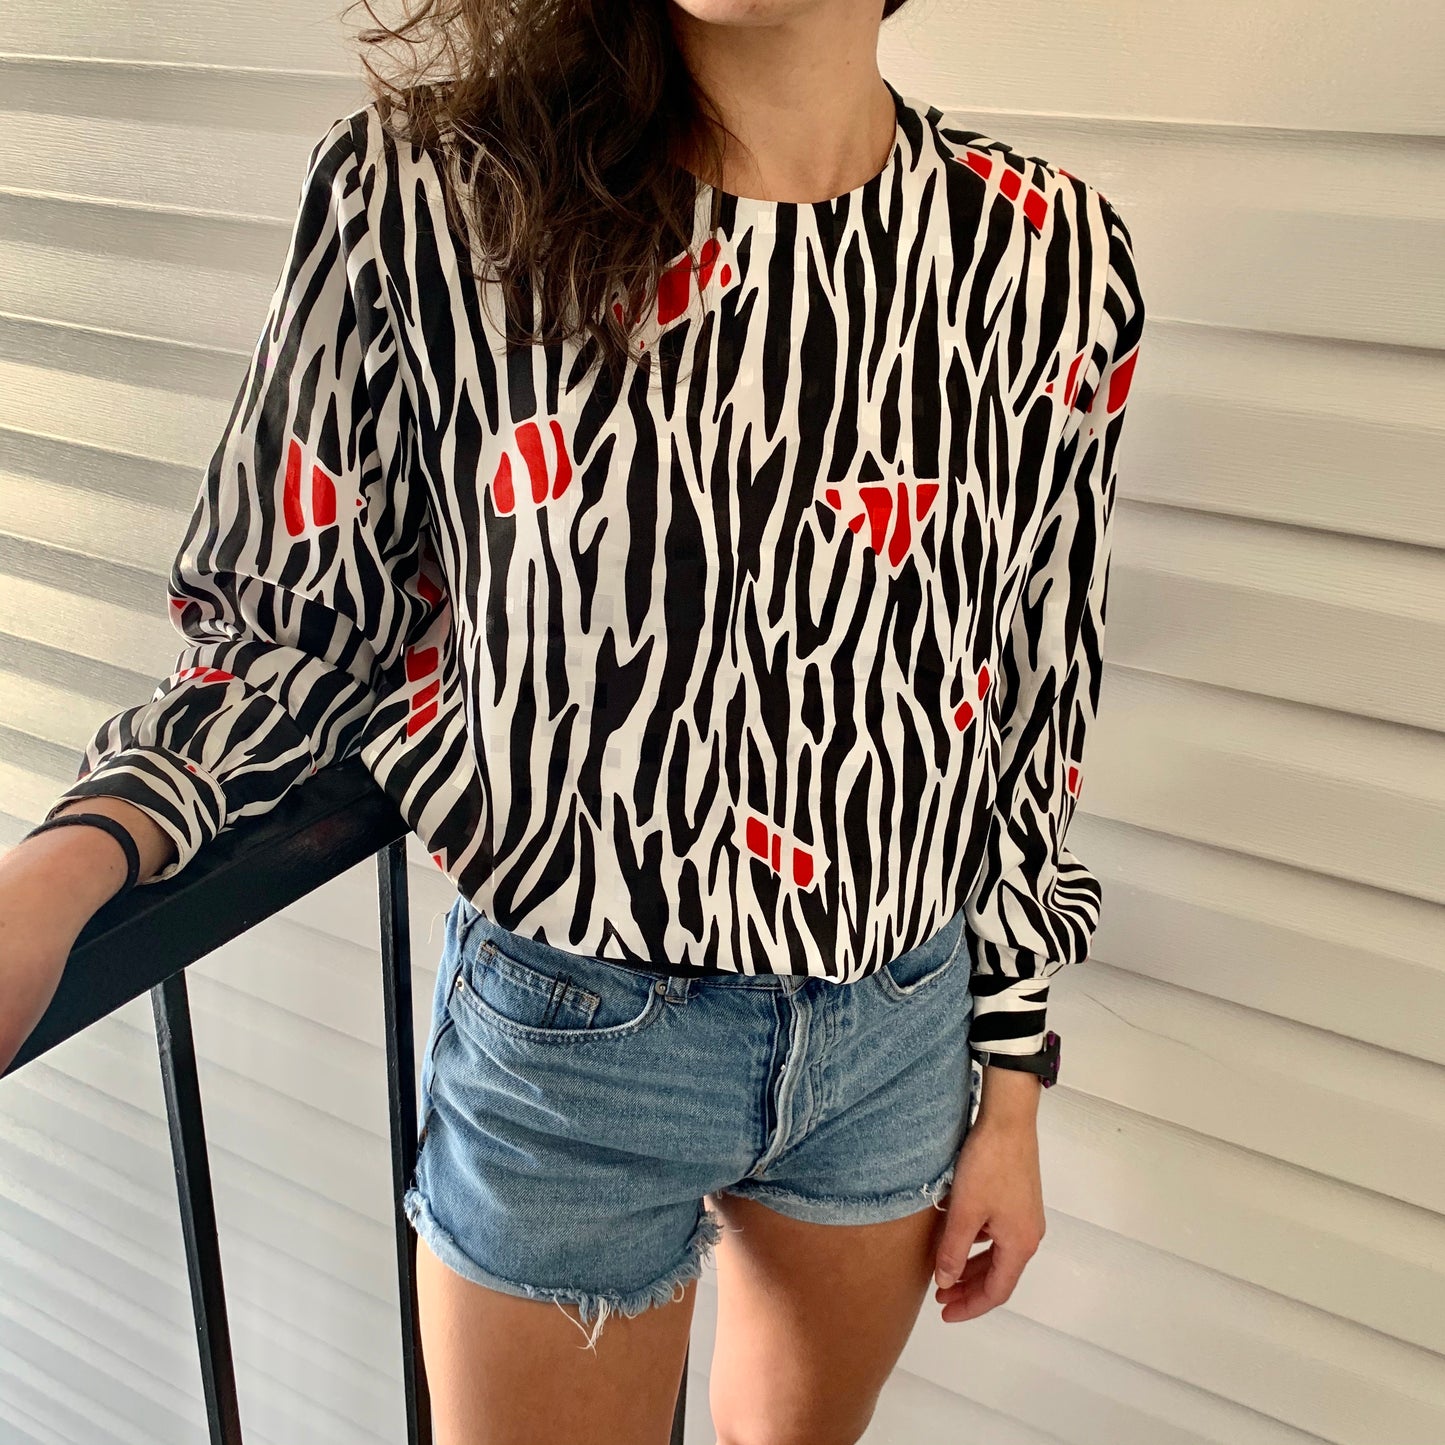 Vintage zebra animal print blouse